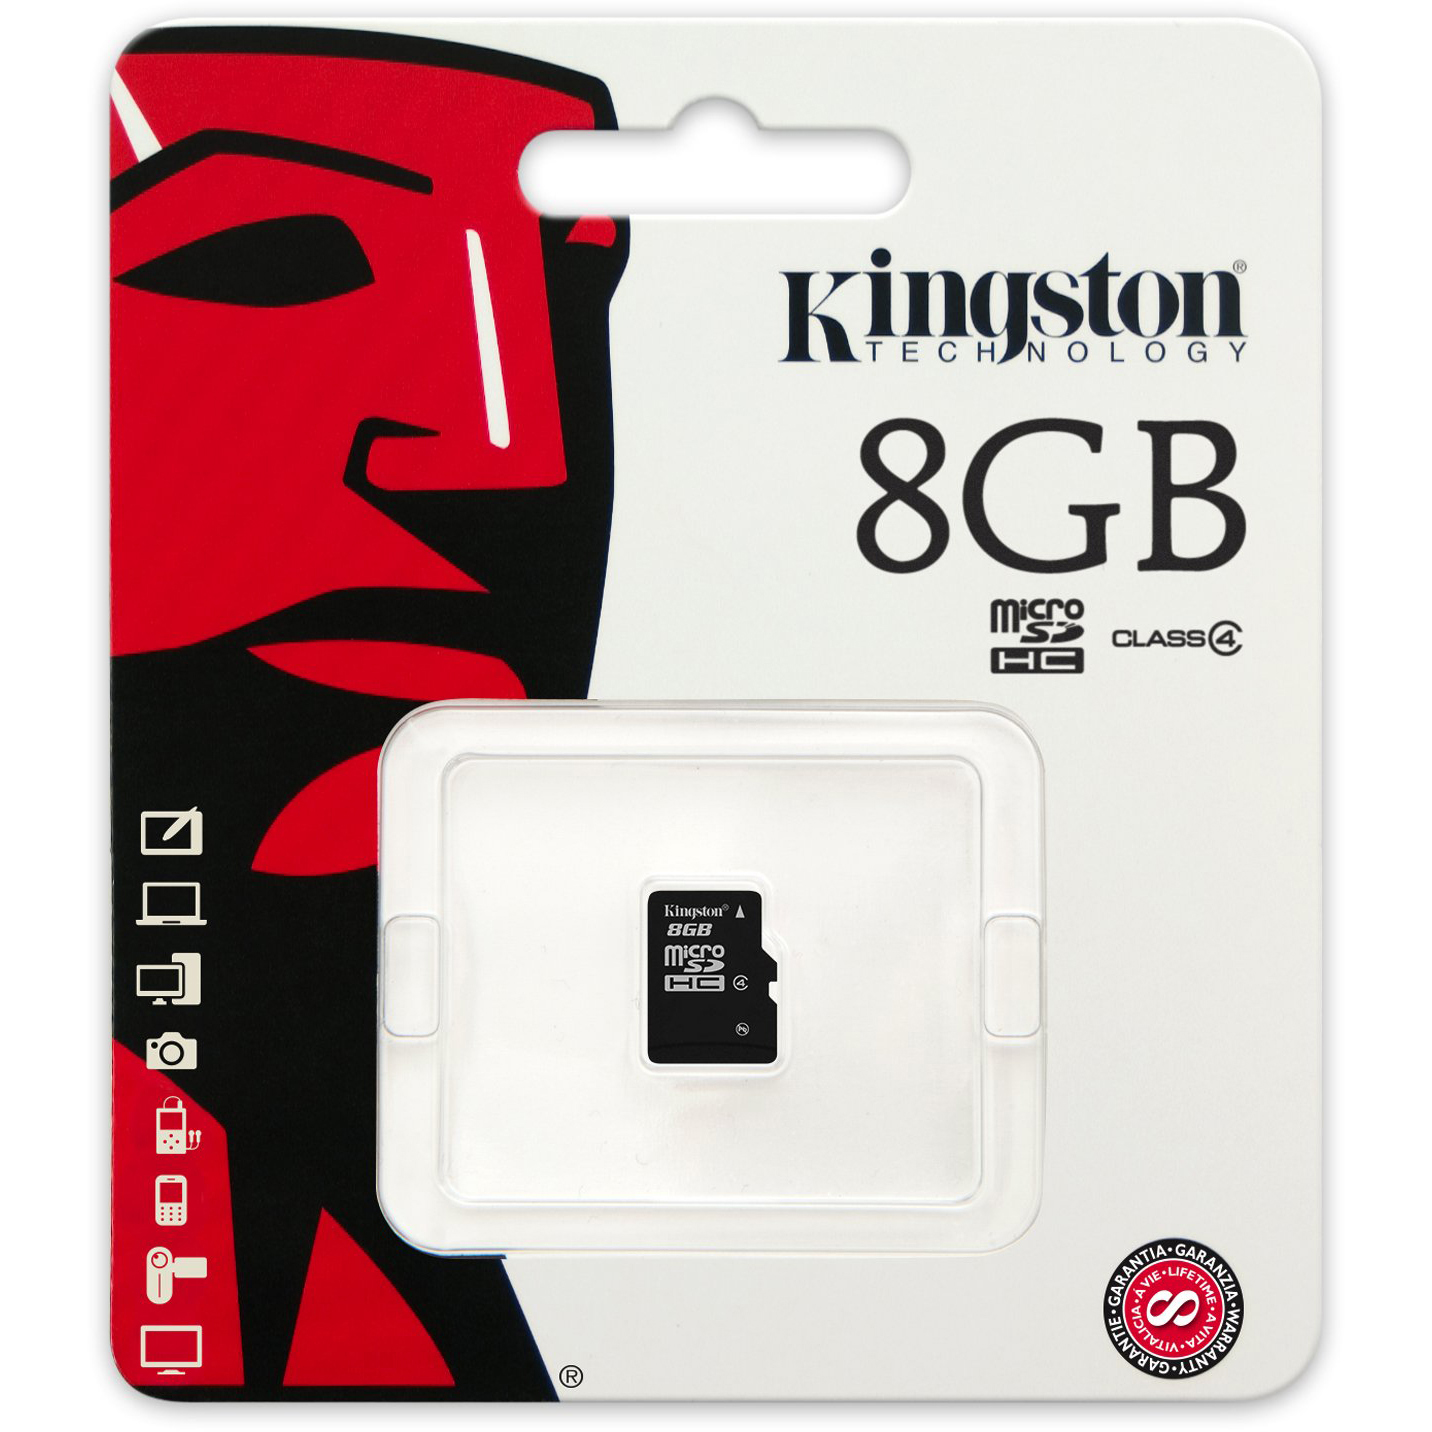 Original Kingston Class 4 8GB MicroSDHC Memory Card (SDC4/8GBSP)